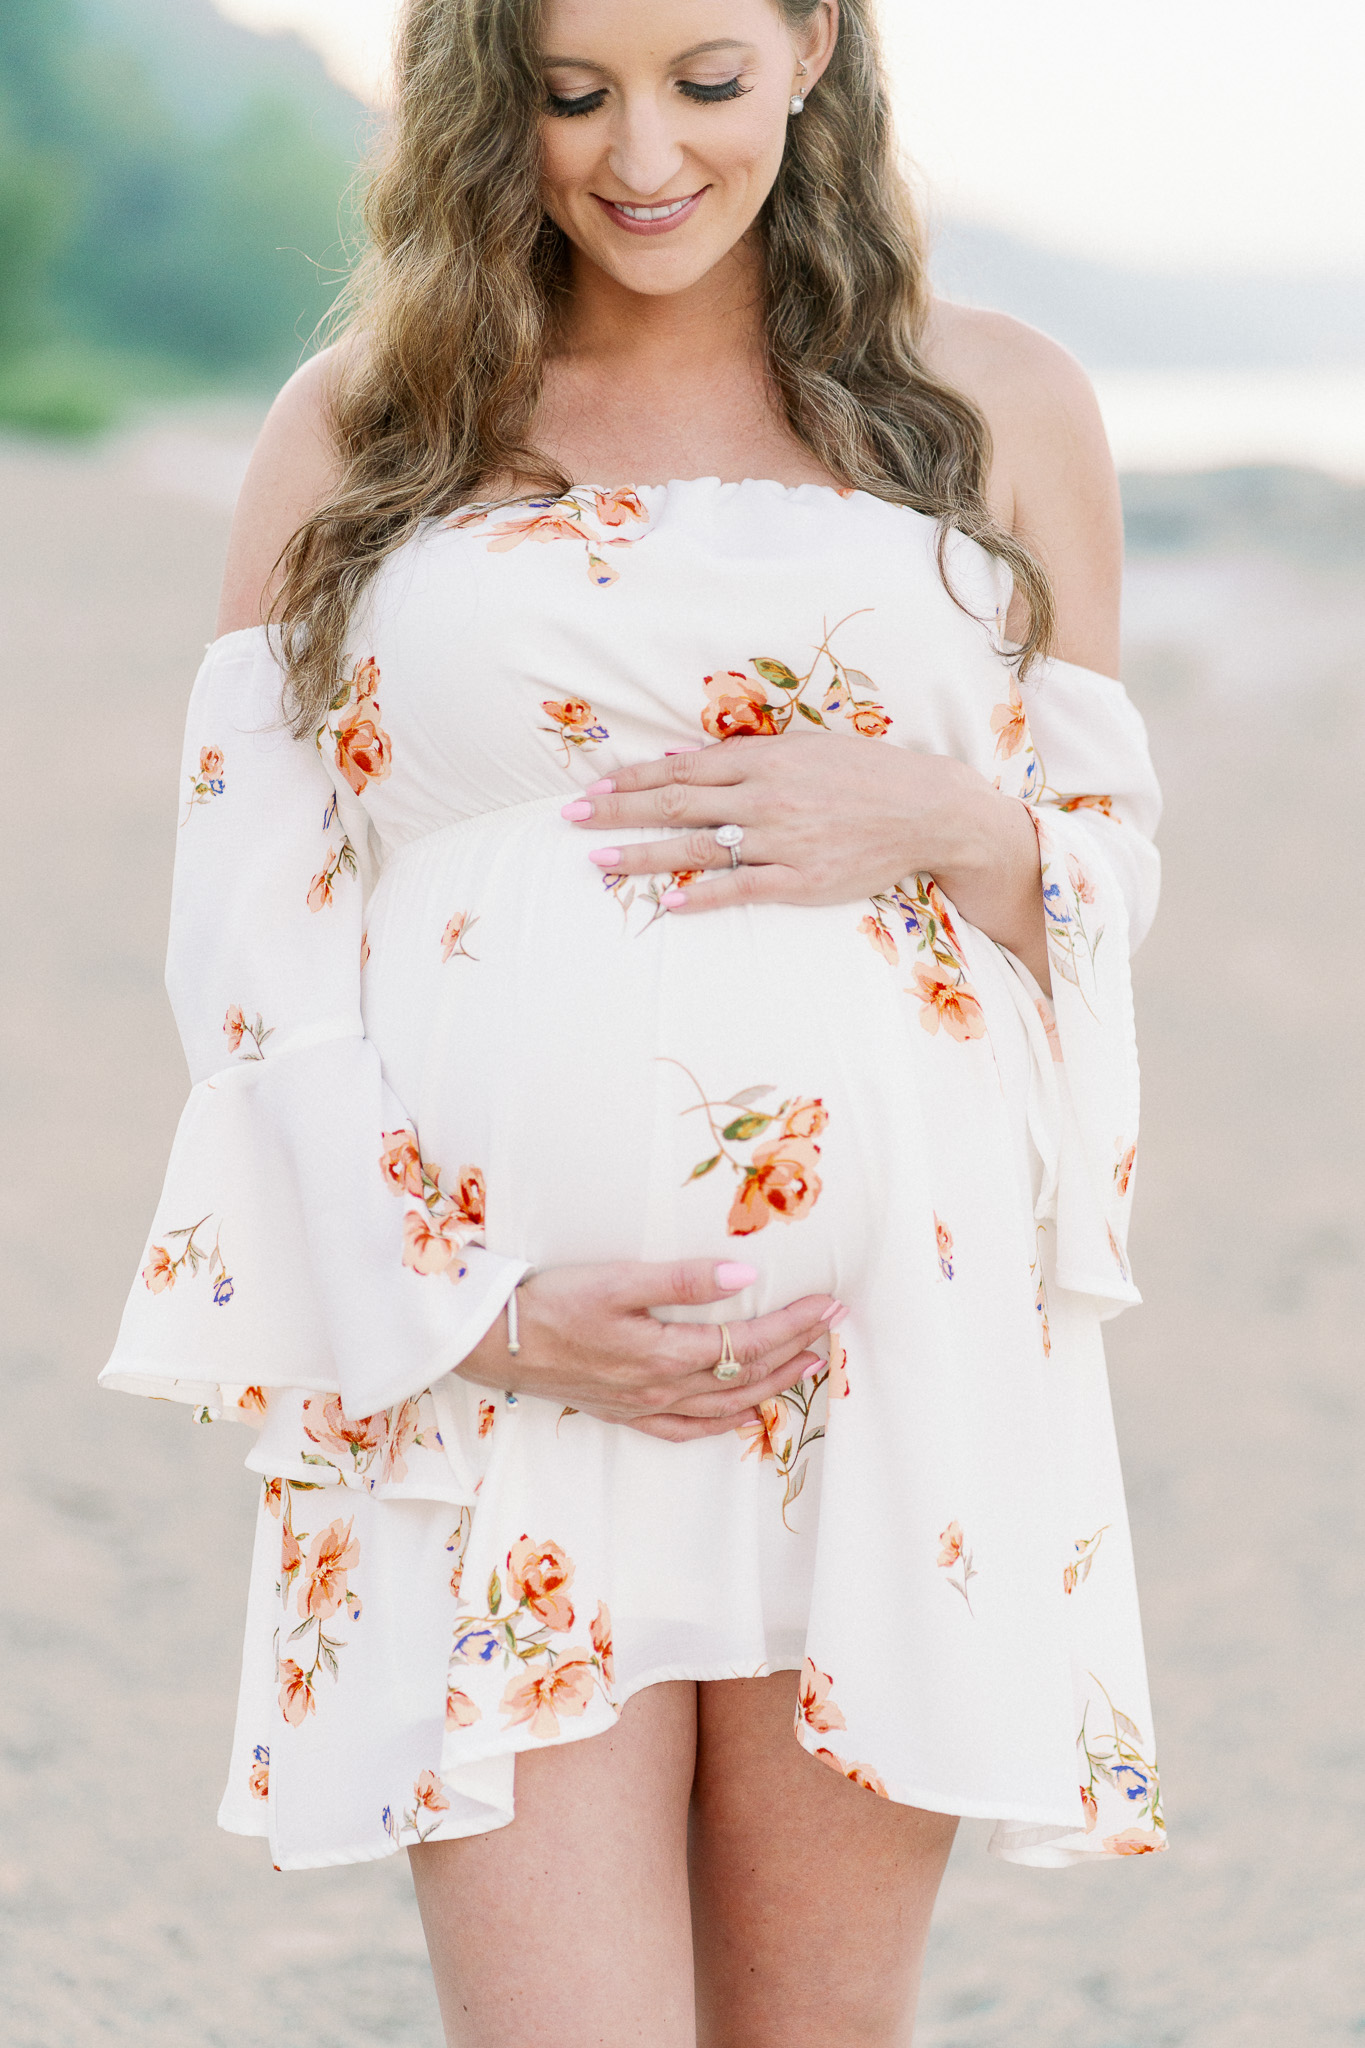 Babymoon Photographer - South Florida Maternity Photographer